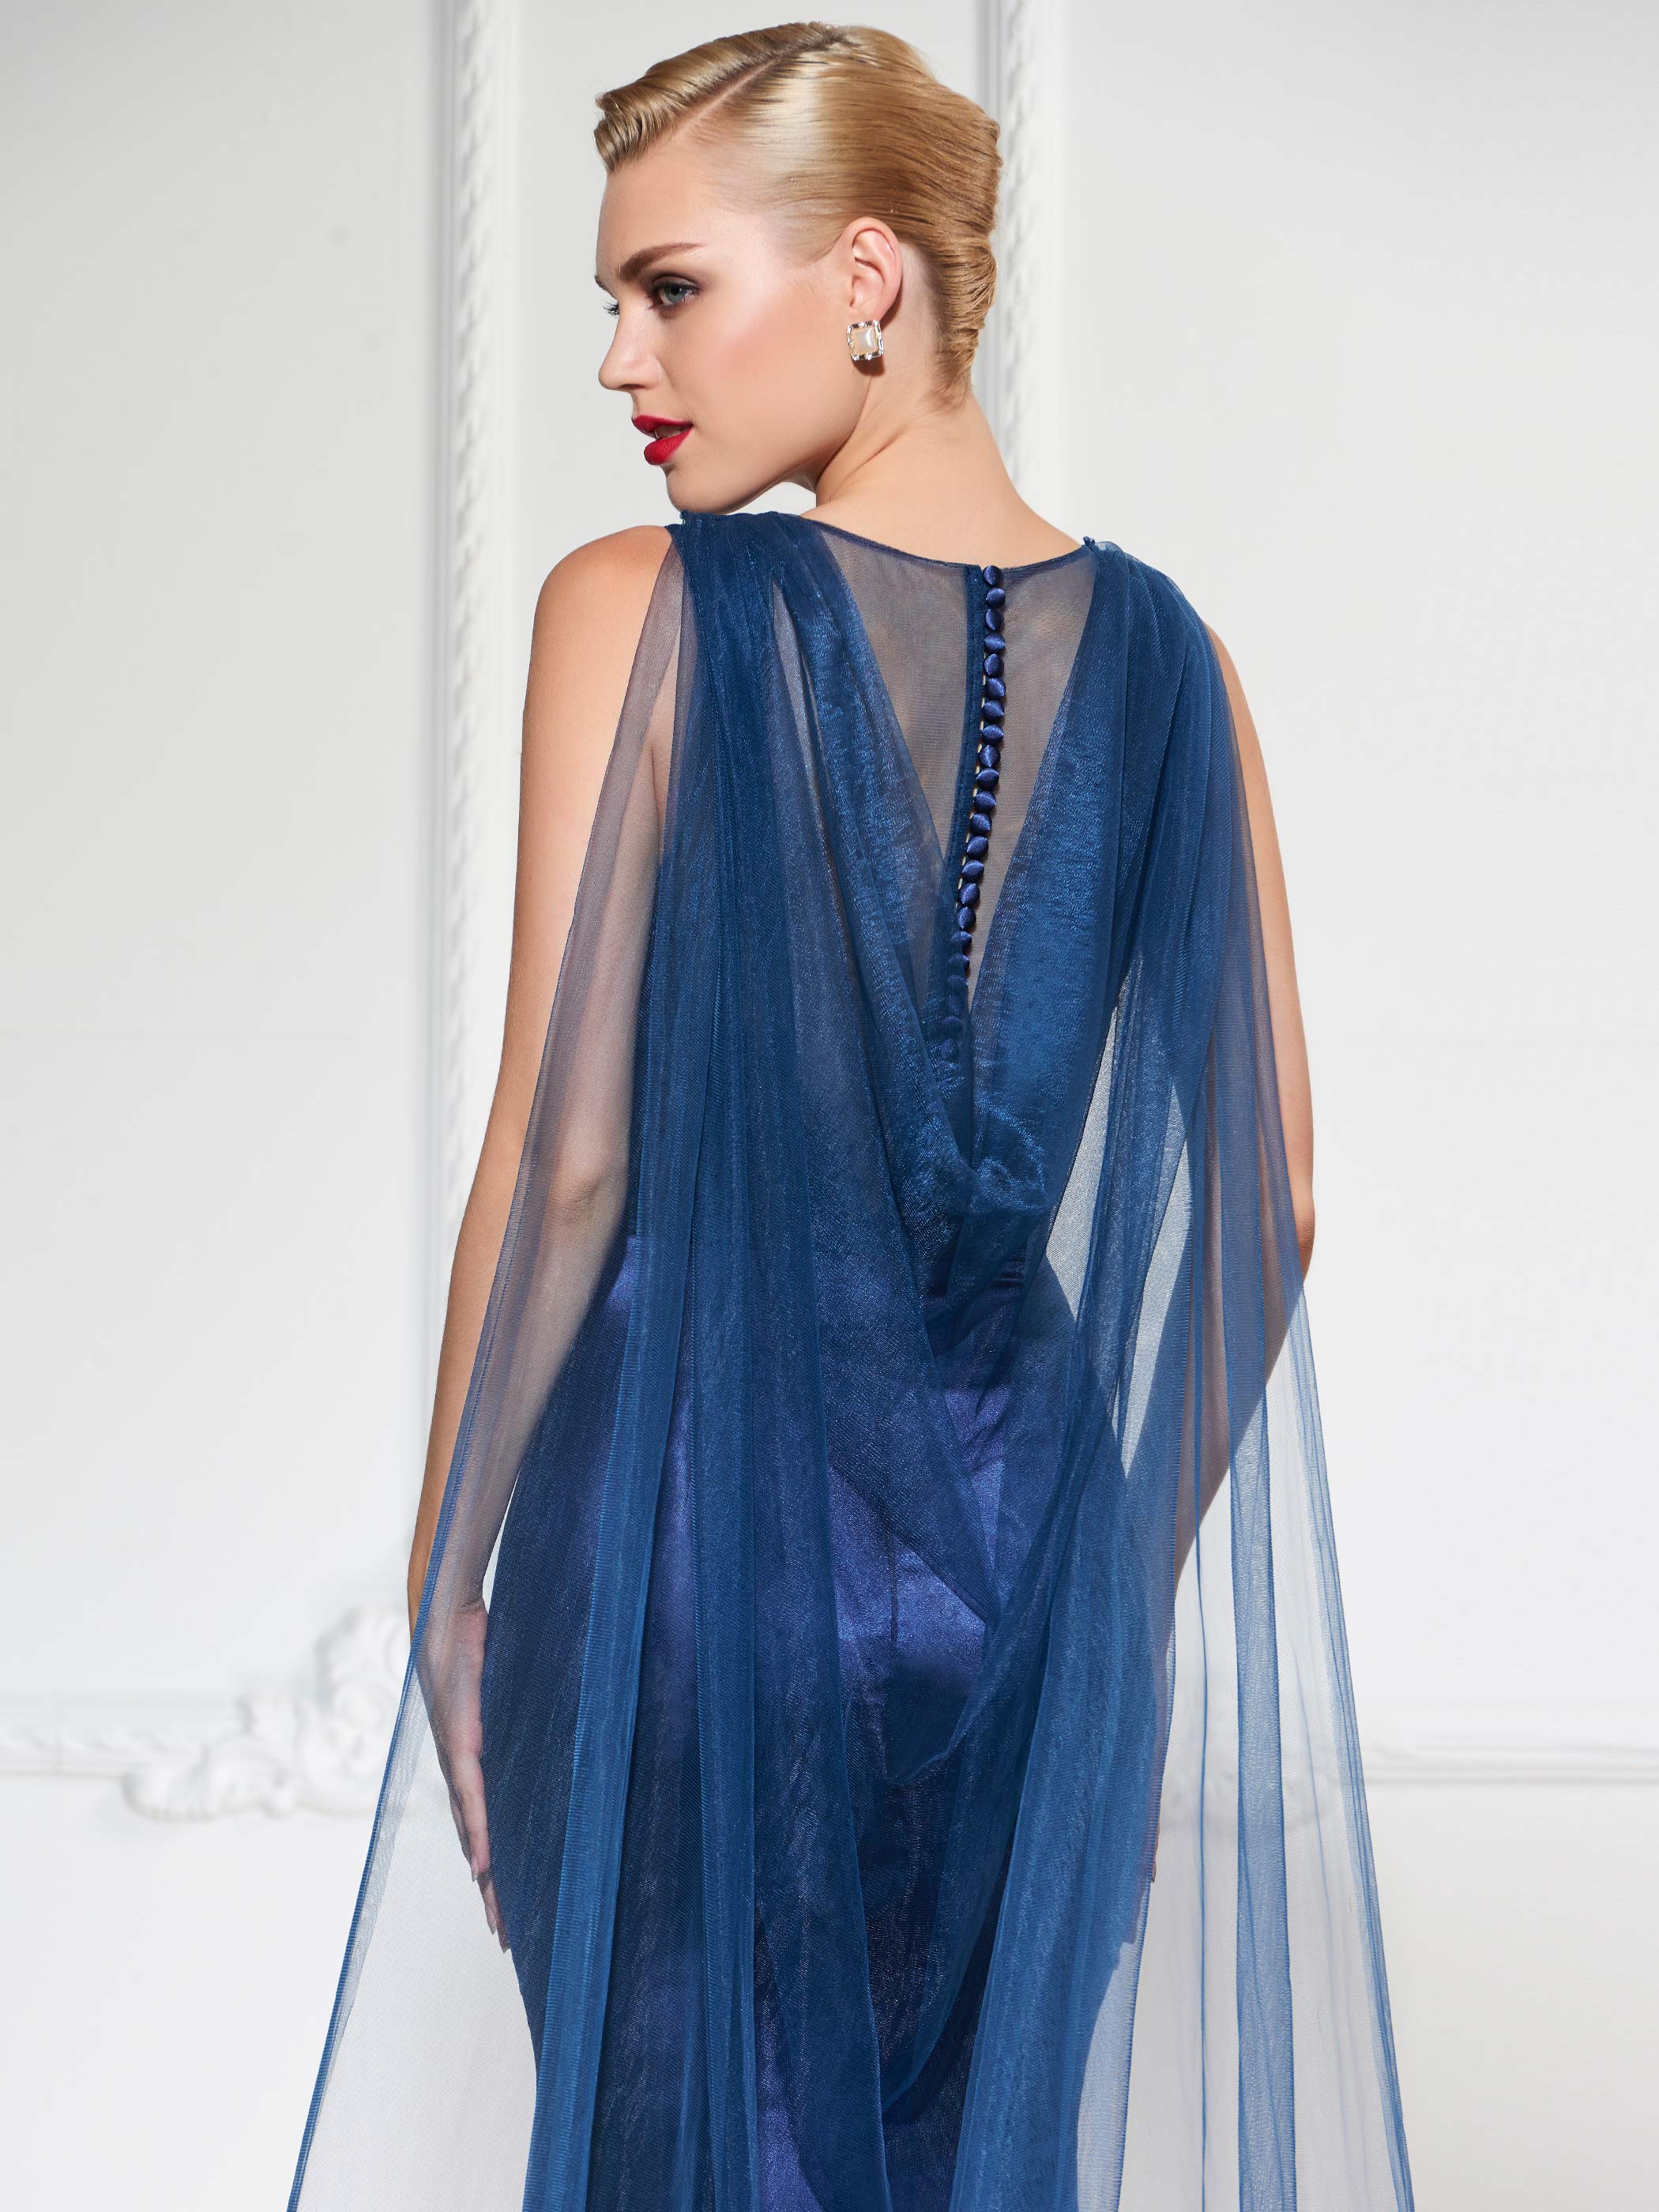 Ericdress Scoop Neckline Lace Applique Floor Length Mermaid Evening Dress With Tulle Cape